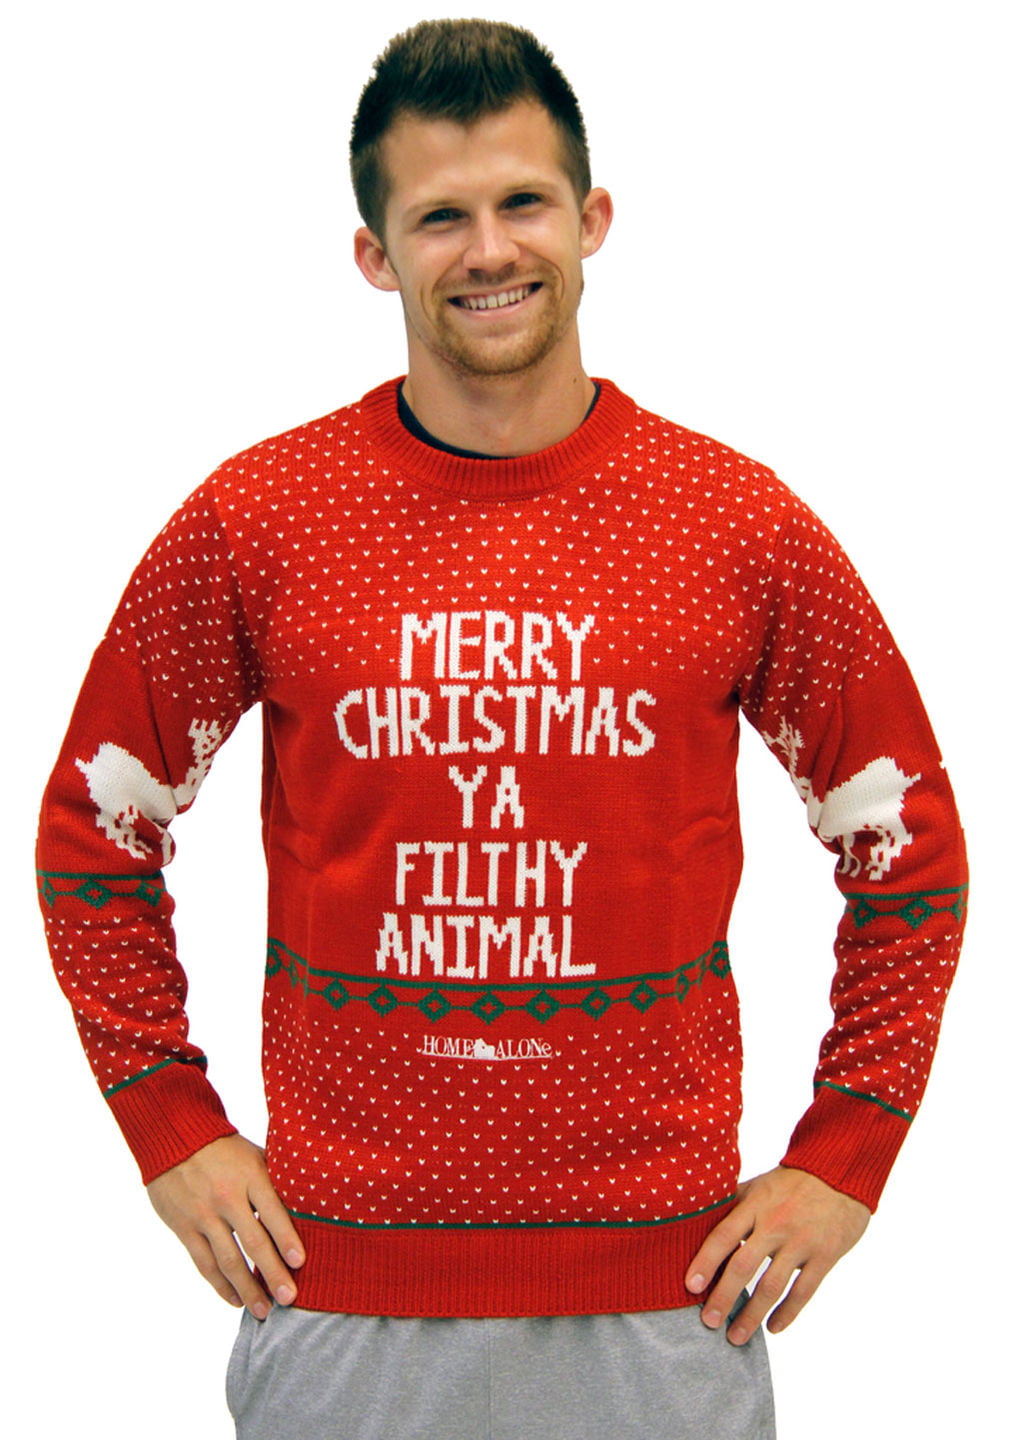 Kids Boys Girls Merry Christmas Ya Filthy Animal Xmas Retro Knit Jumper Sweater 